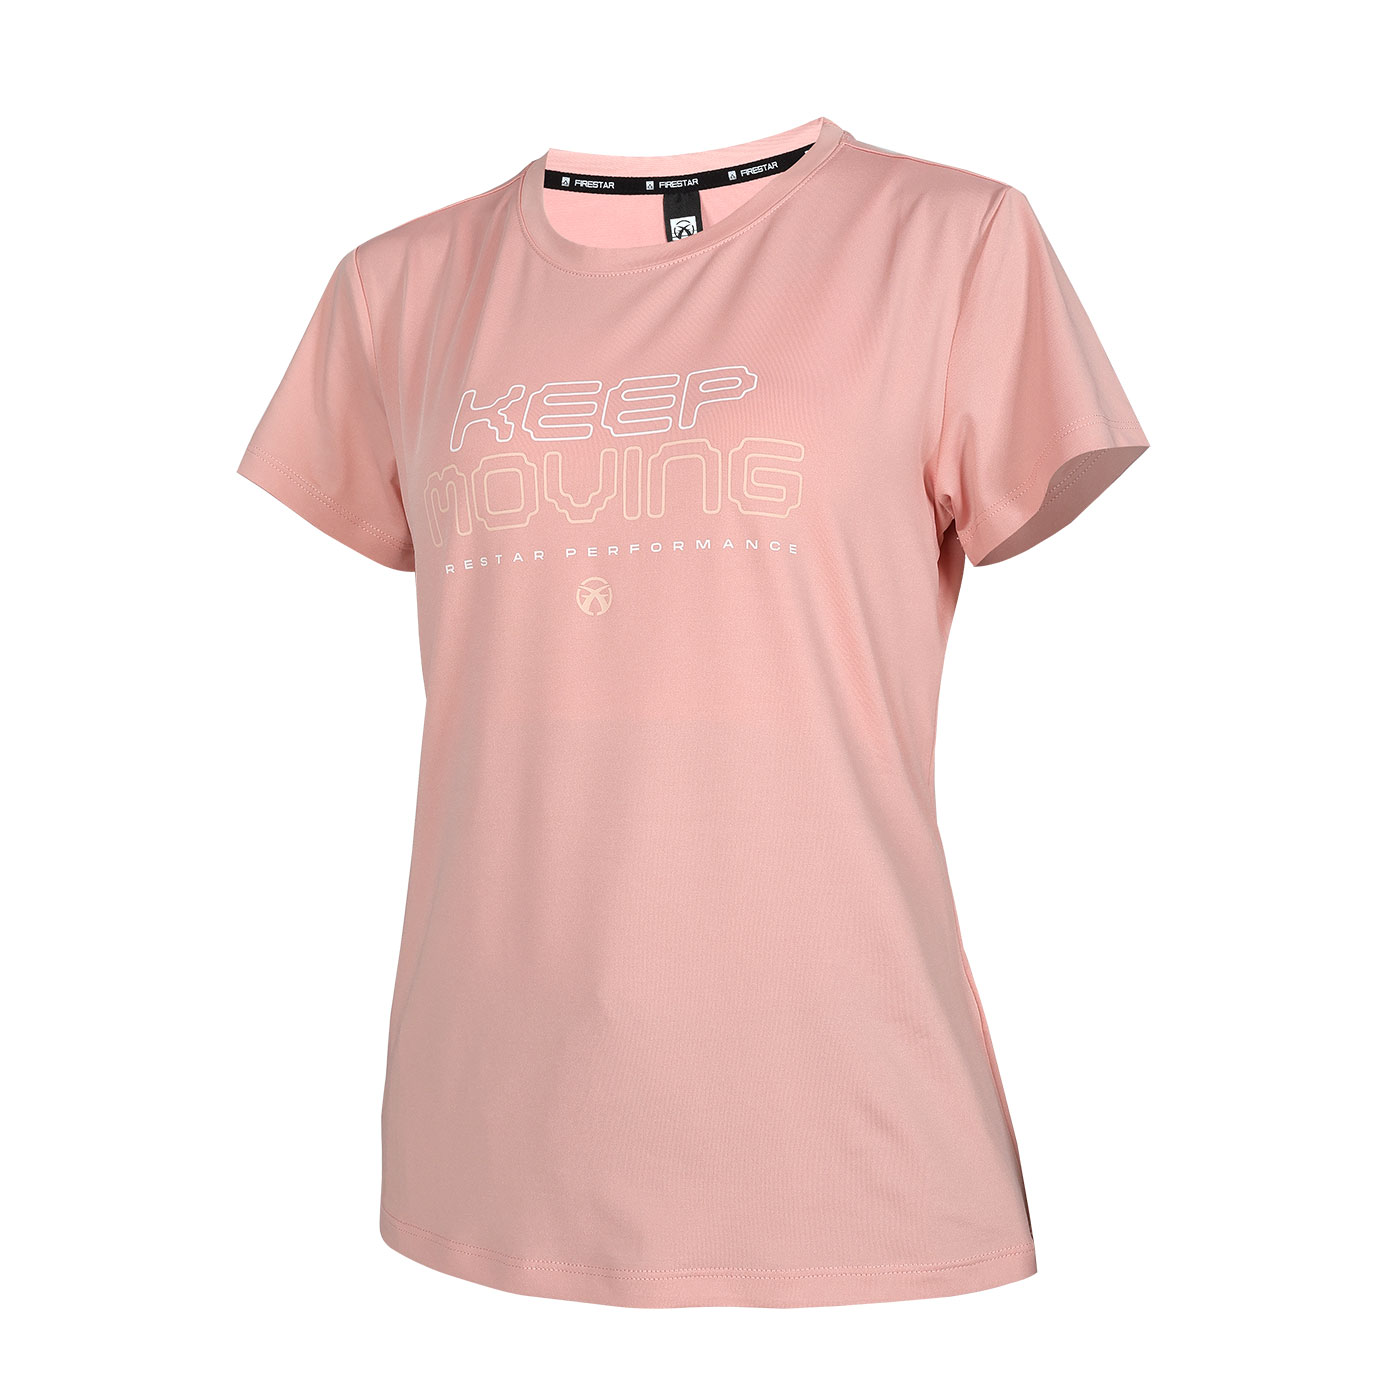 FIRESTAR 女彈性印花短袖T恤  DL462-43 - 淺粉橘白